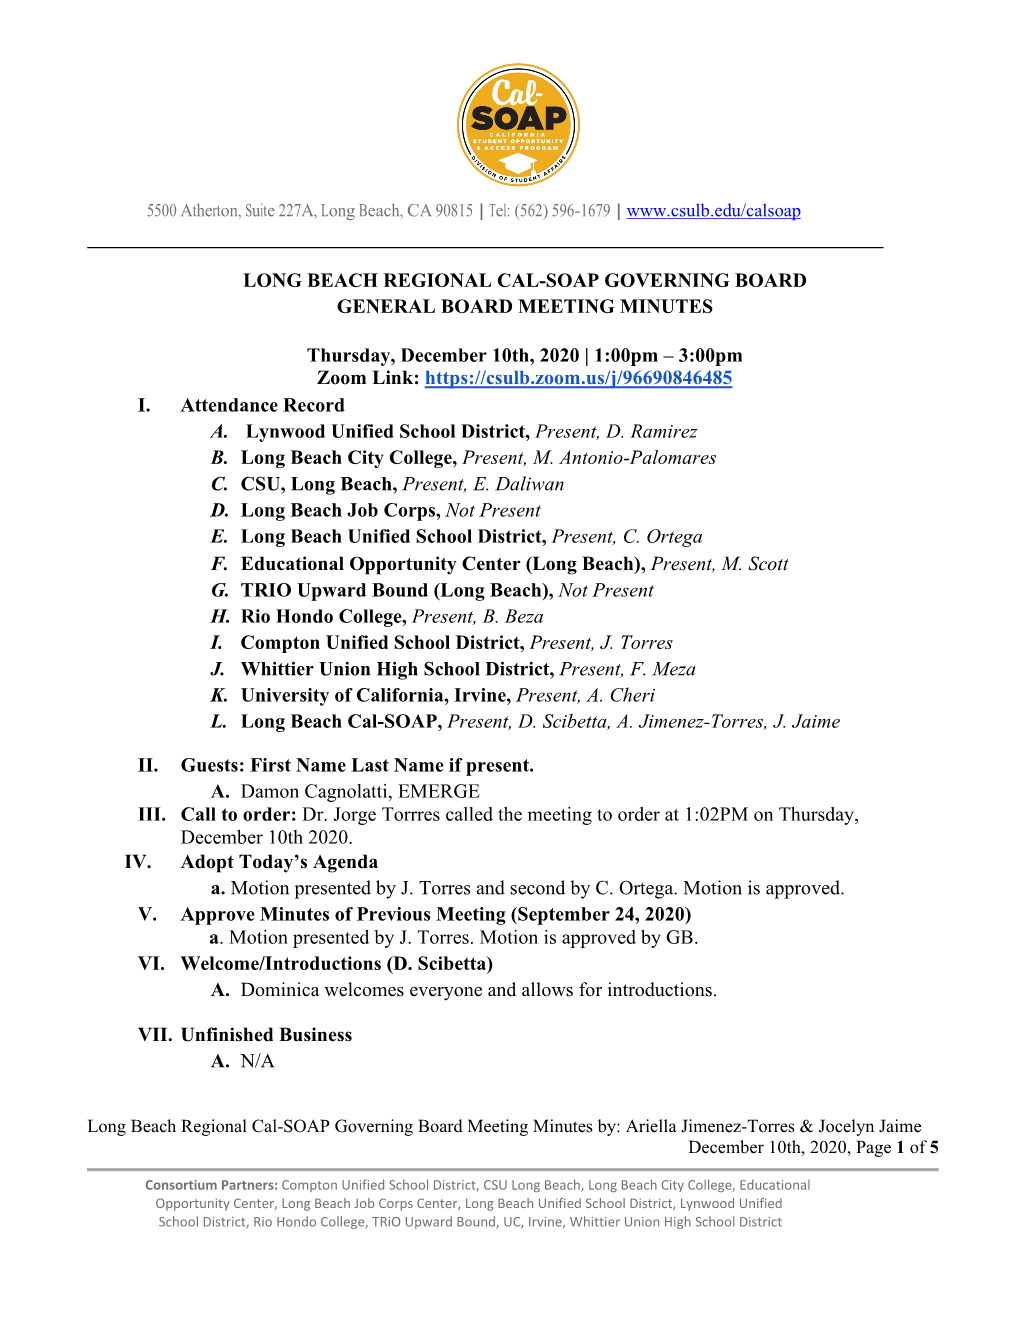 Long Beach Regional Cal-Soap Governing Board General Board Meeting Minutes